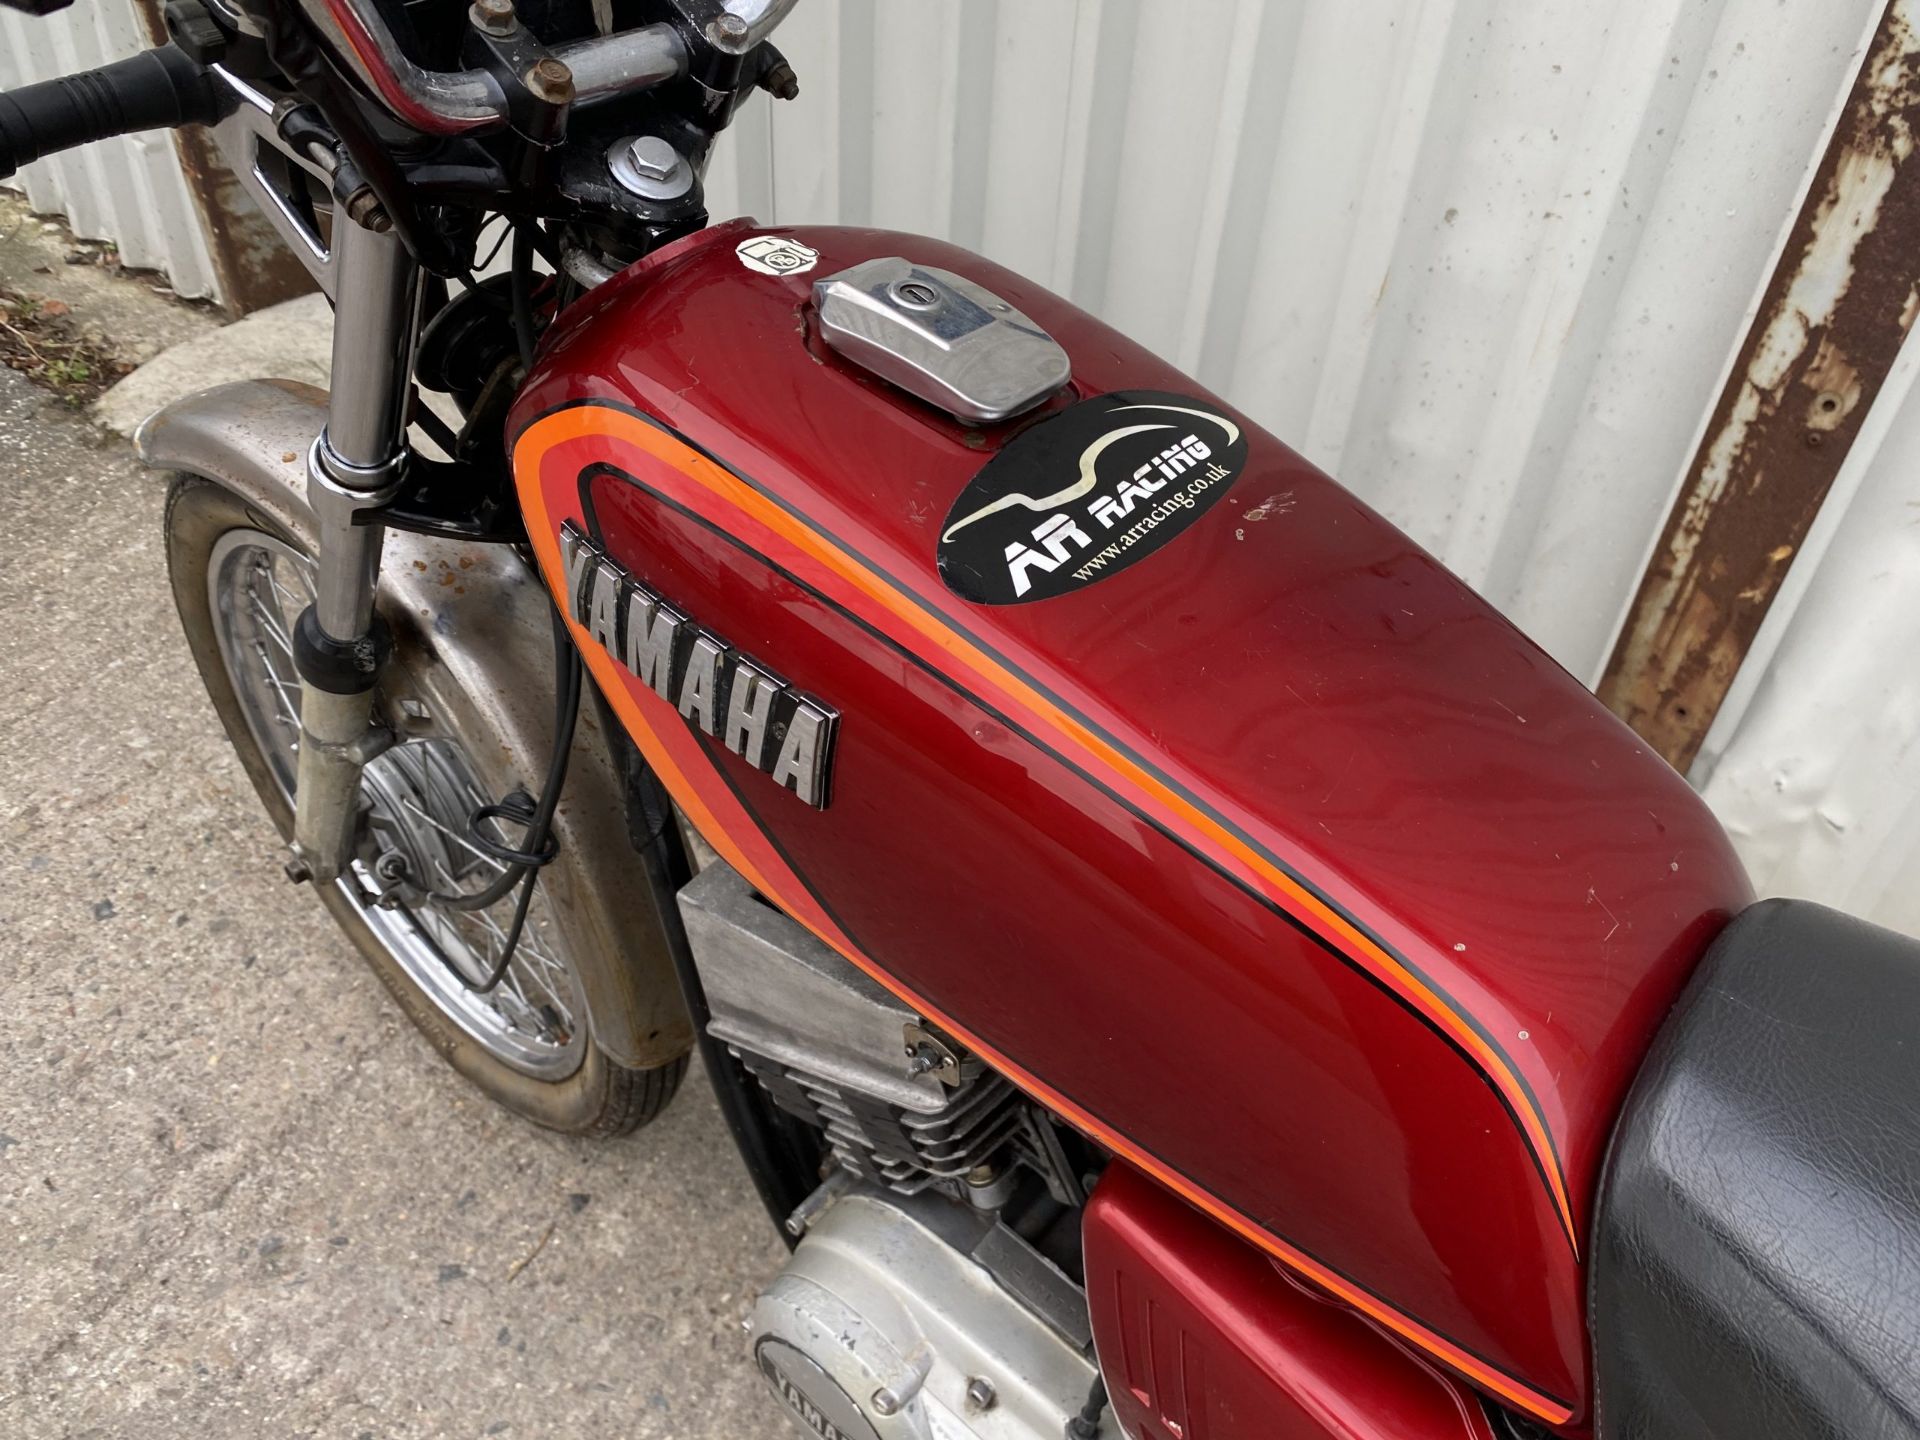 Yamaha RXS100 Motorcycle - Image 4 of 18